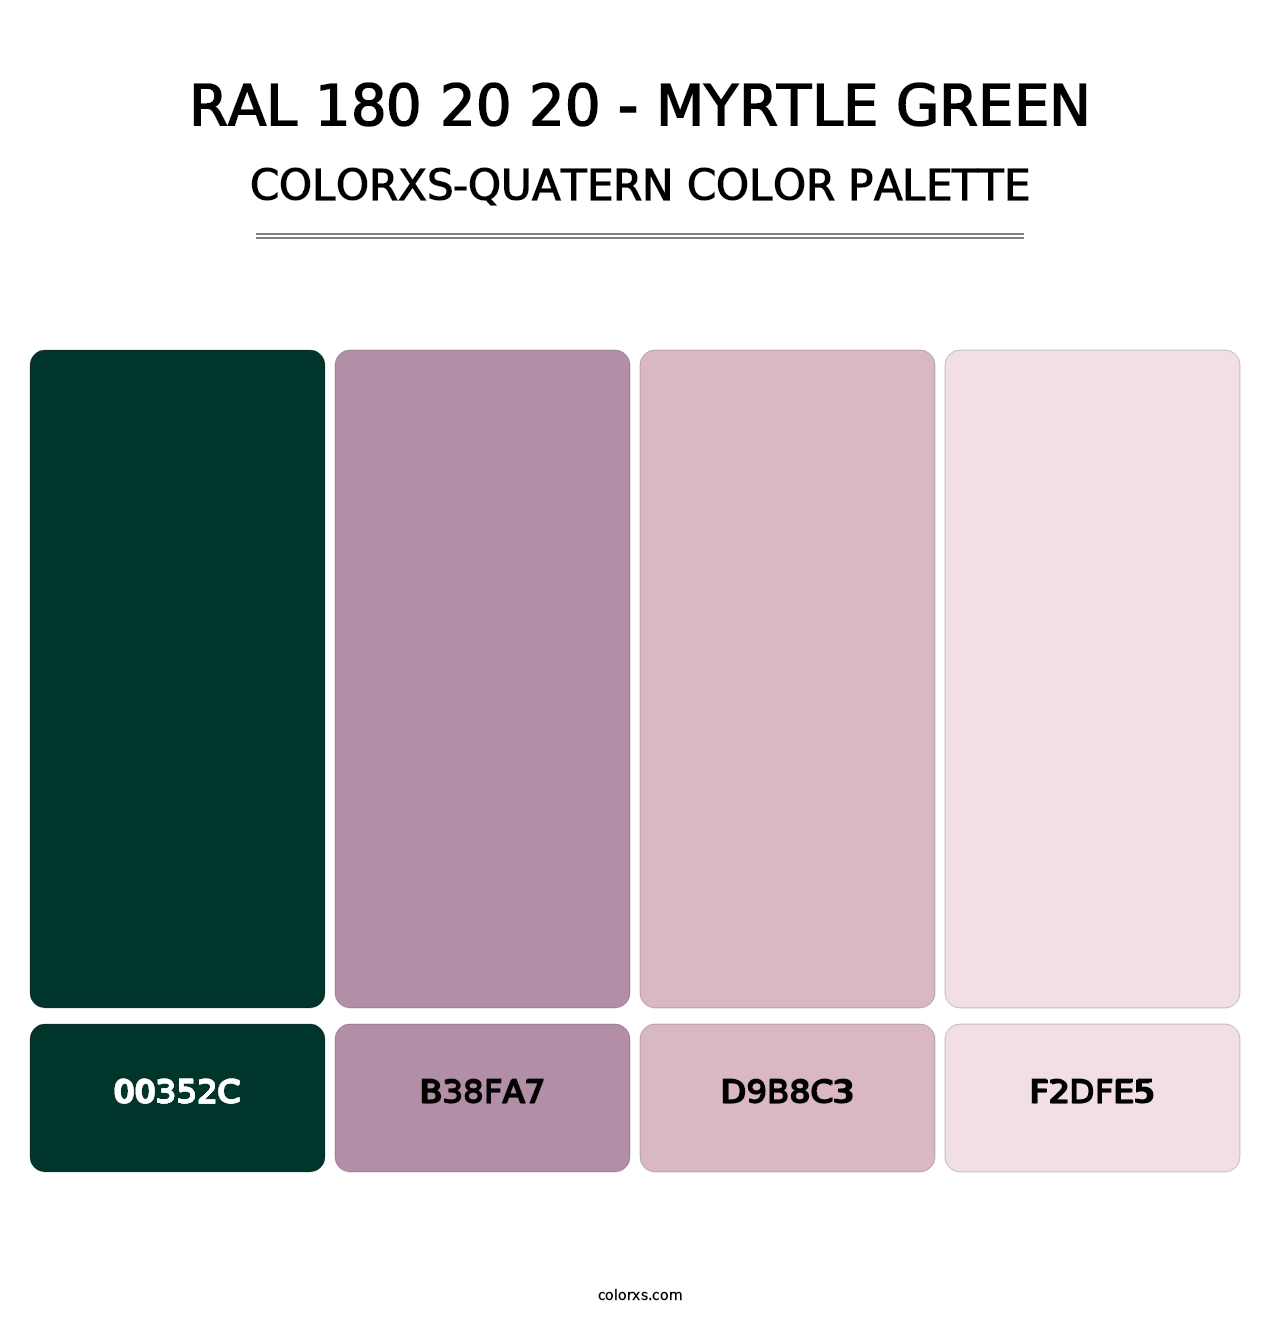 RAL 180 20 20 - Myrtle Green - Colorxs Quatern Palette